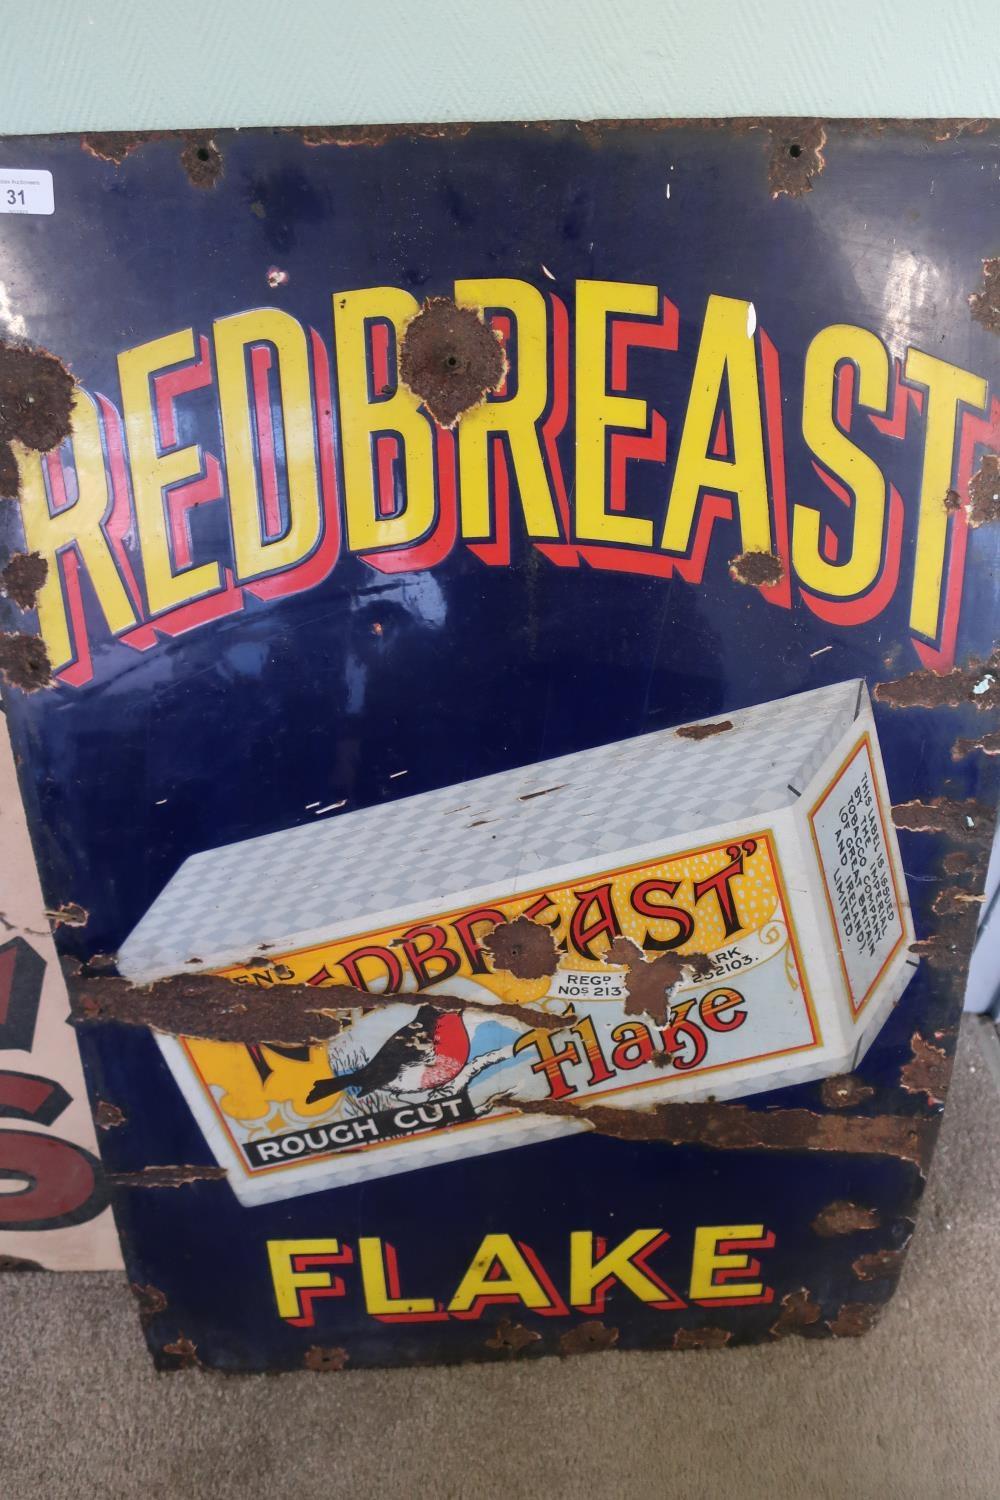 Enamel advertising sign for Redbreast Flake (tobacco) (61cm x 91.5cm)